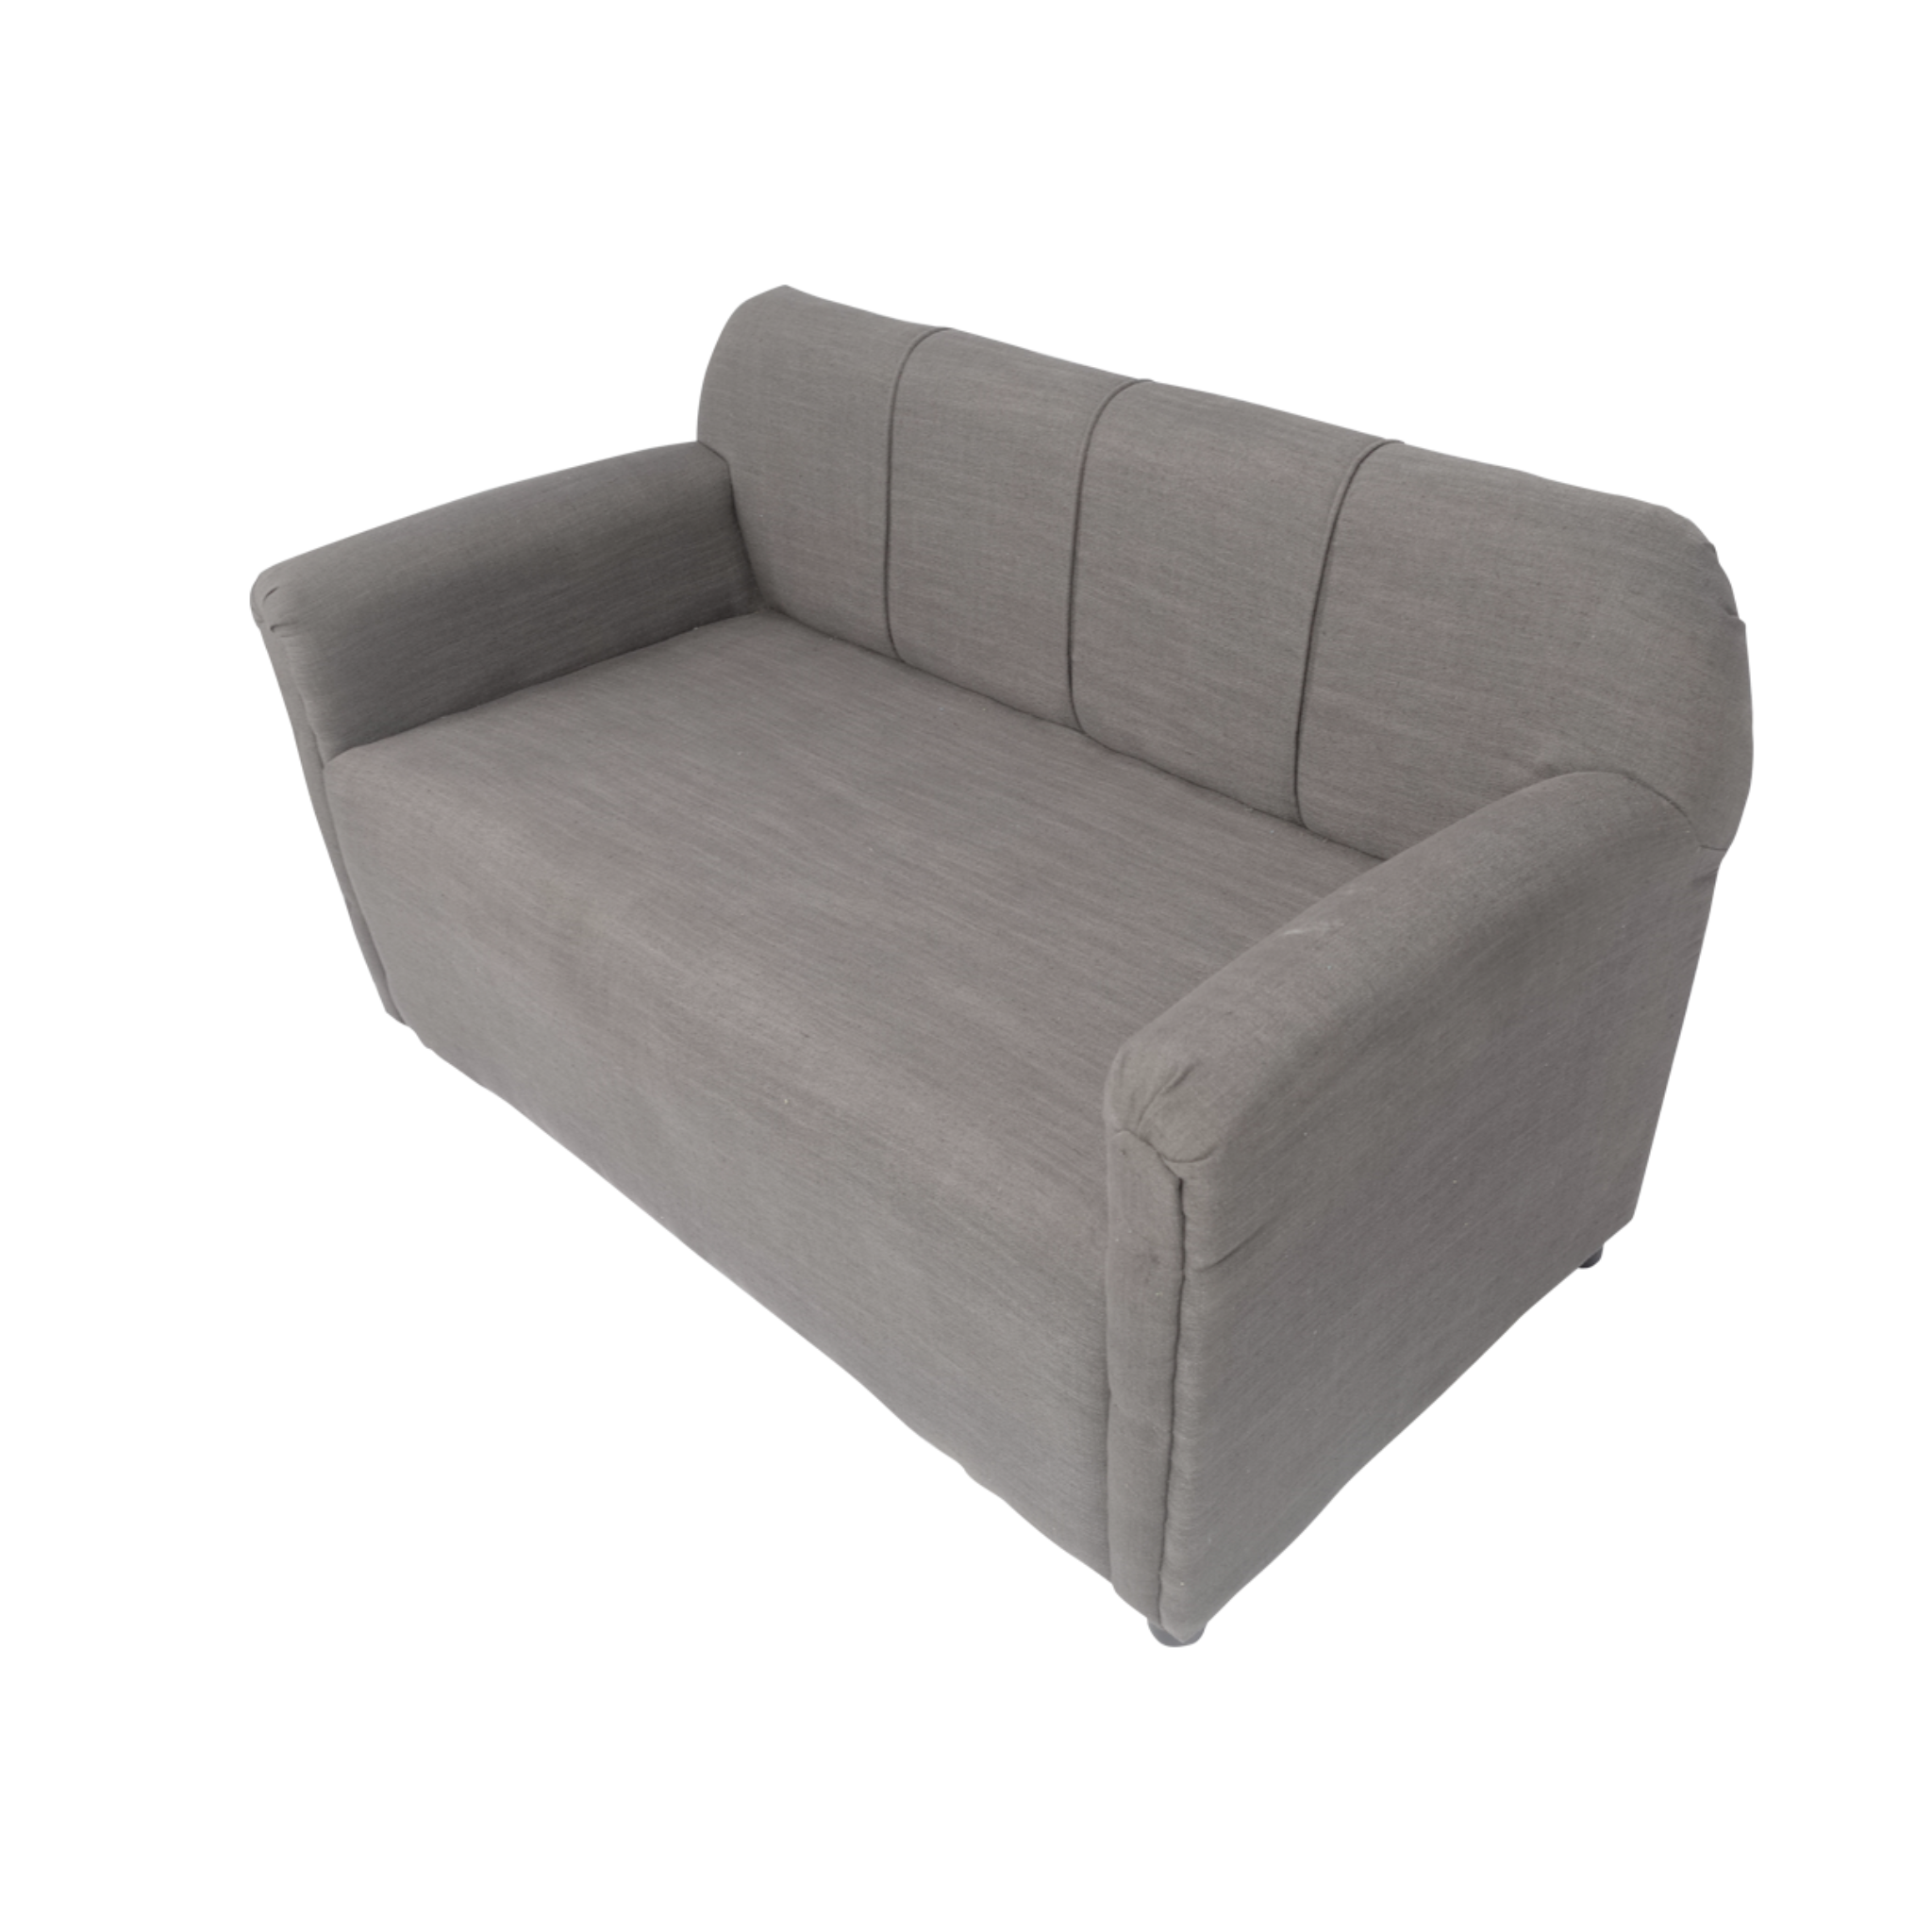 SASHA 2-Seater Fabric Sofa AF Home